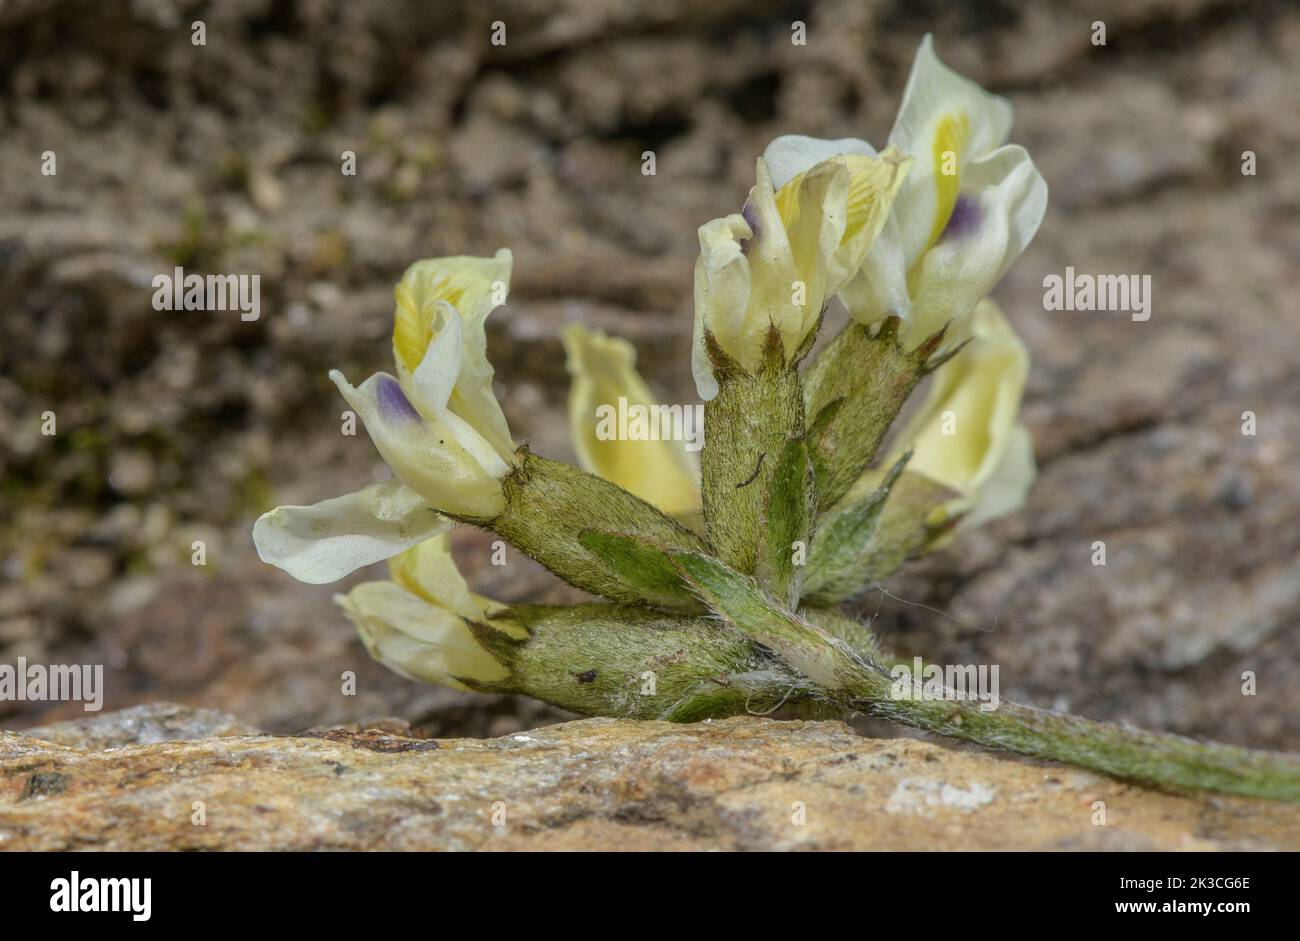 Yellow Milk-vetch, Oxytropis campestris subsp. tyroliensis, in flower in the Italian Alps - showing Oxytropis peg on keel. Stock Photo